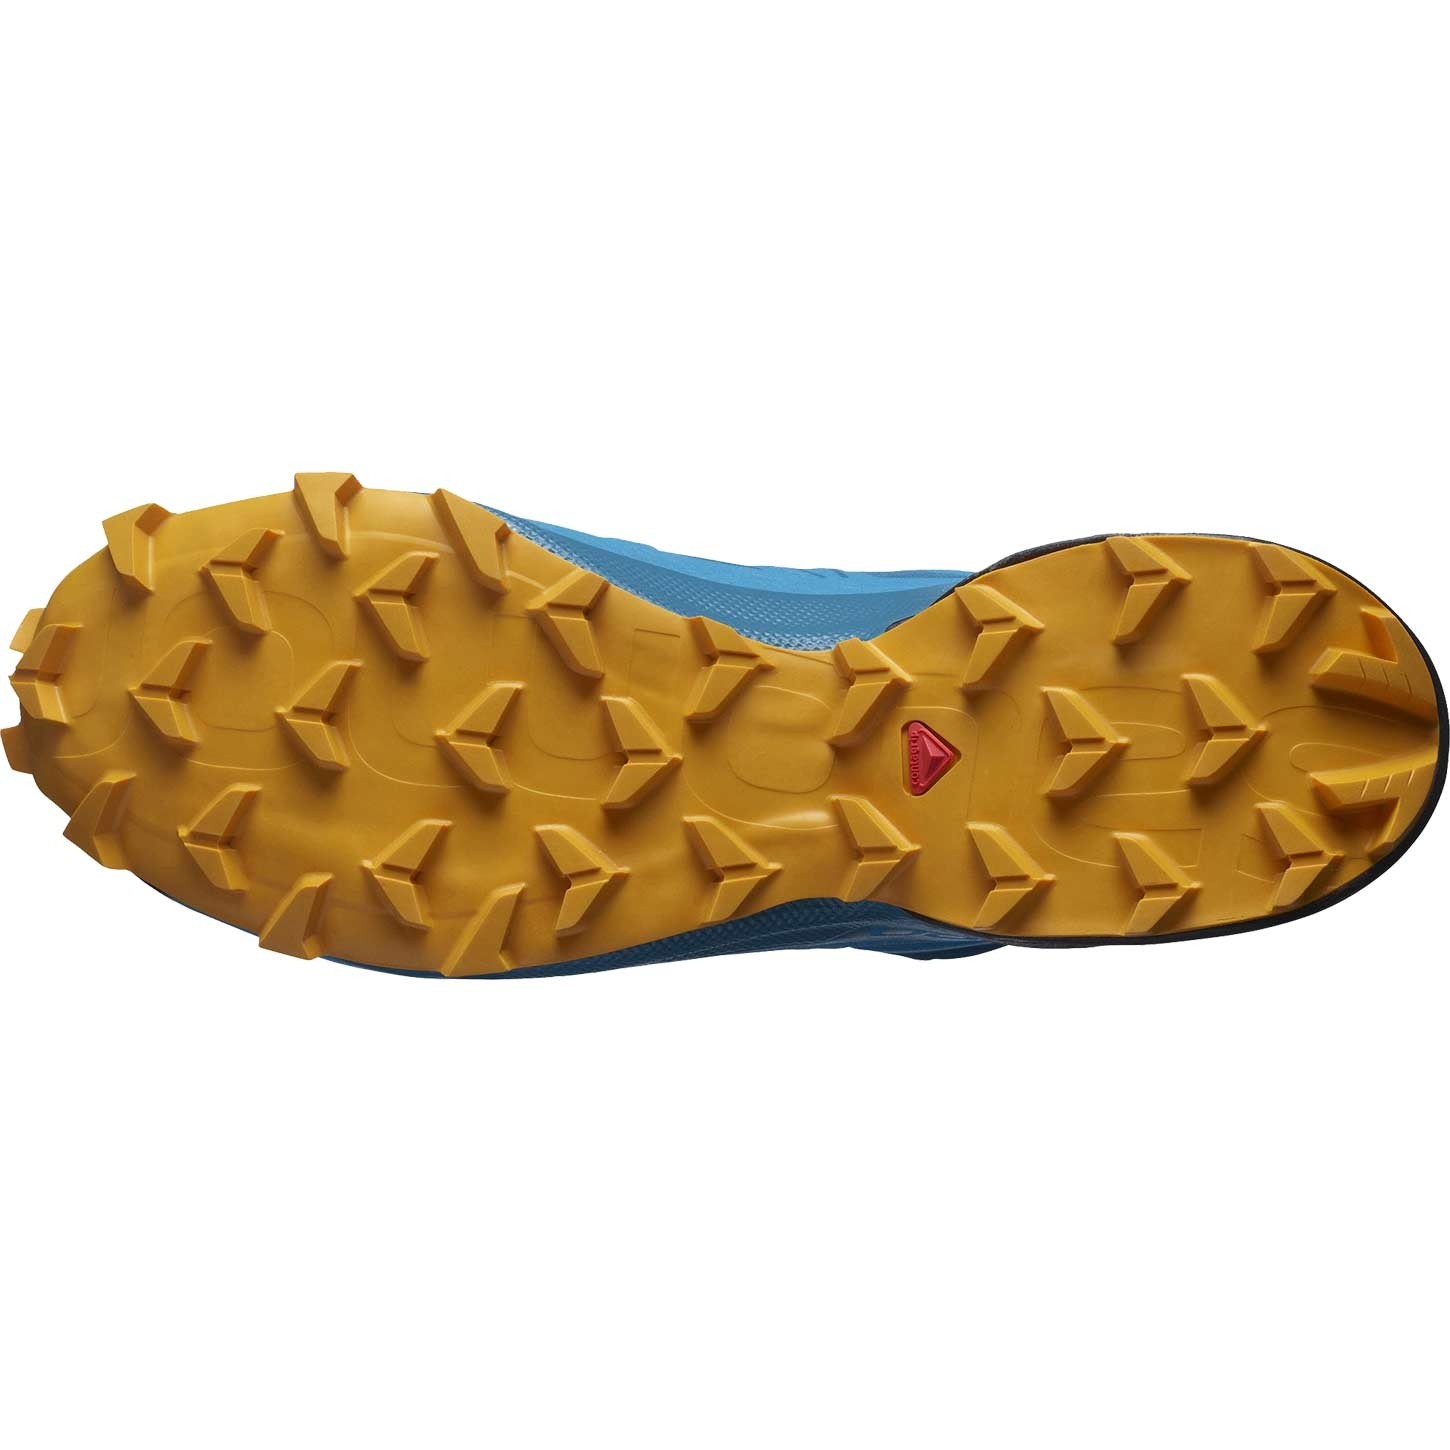 Salomon Speedcross 5 - Men's Running Shoe - Crystal Teal/Barr Reef/Golden Oak